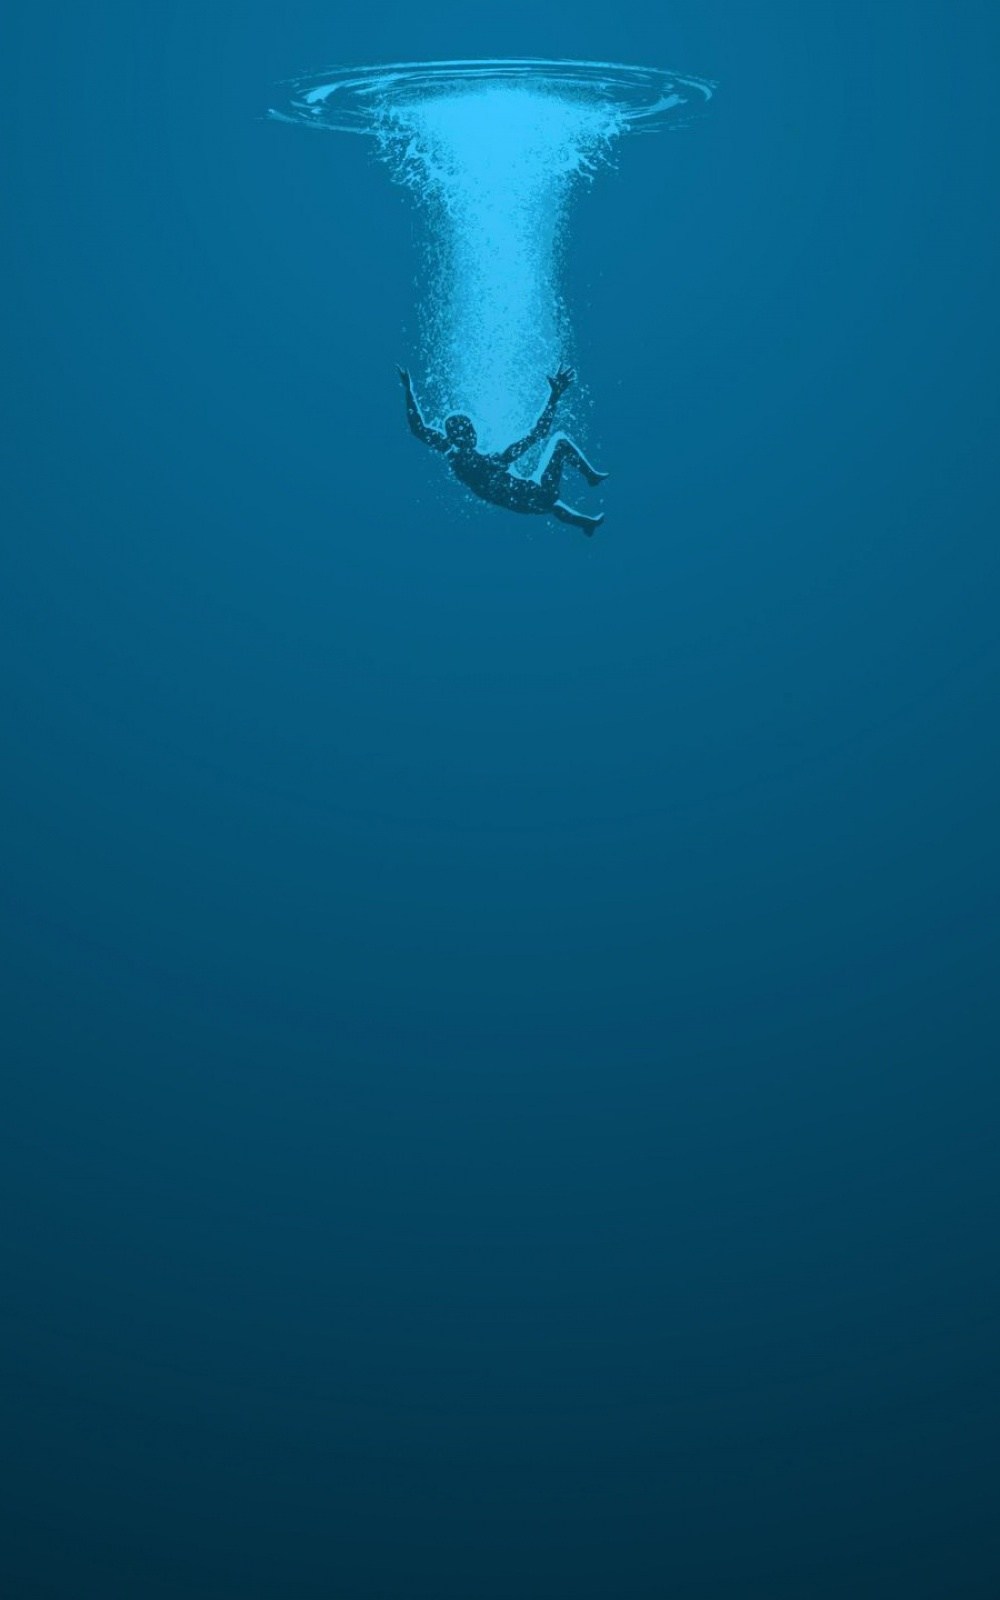 Man Drowning Blue Water Lockscreen Android Wallpaper - Iphone 6 Hd Disney , HD Wallpaper & Backgrounds